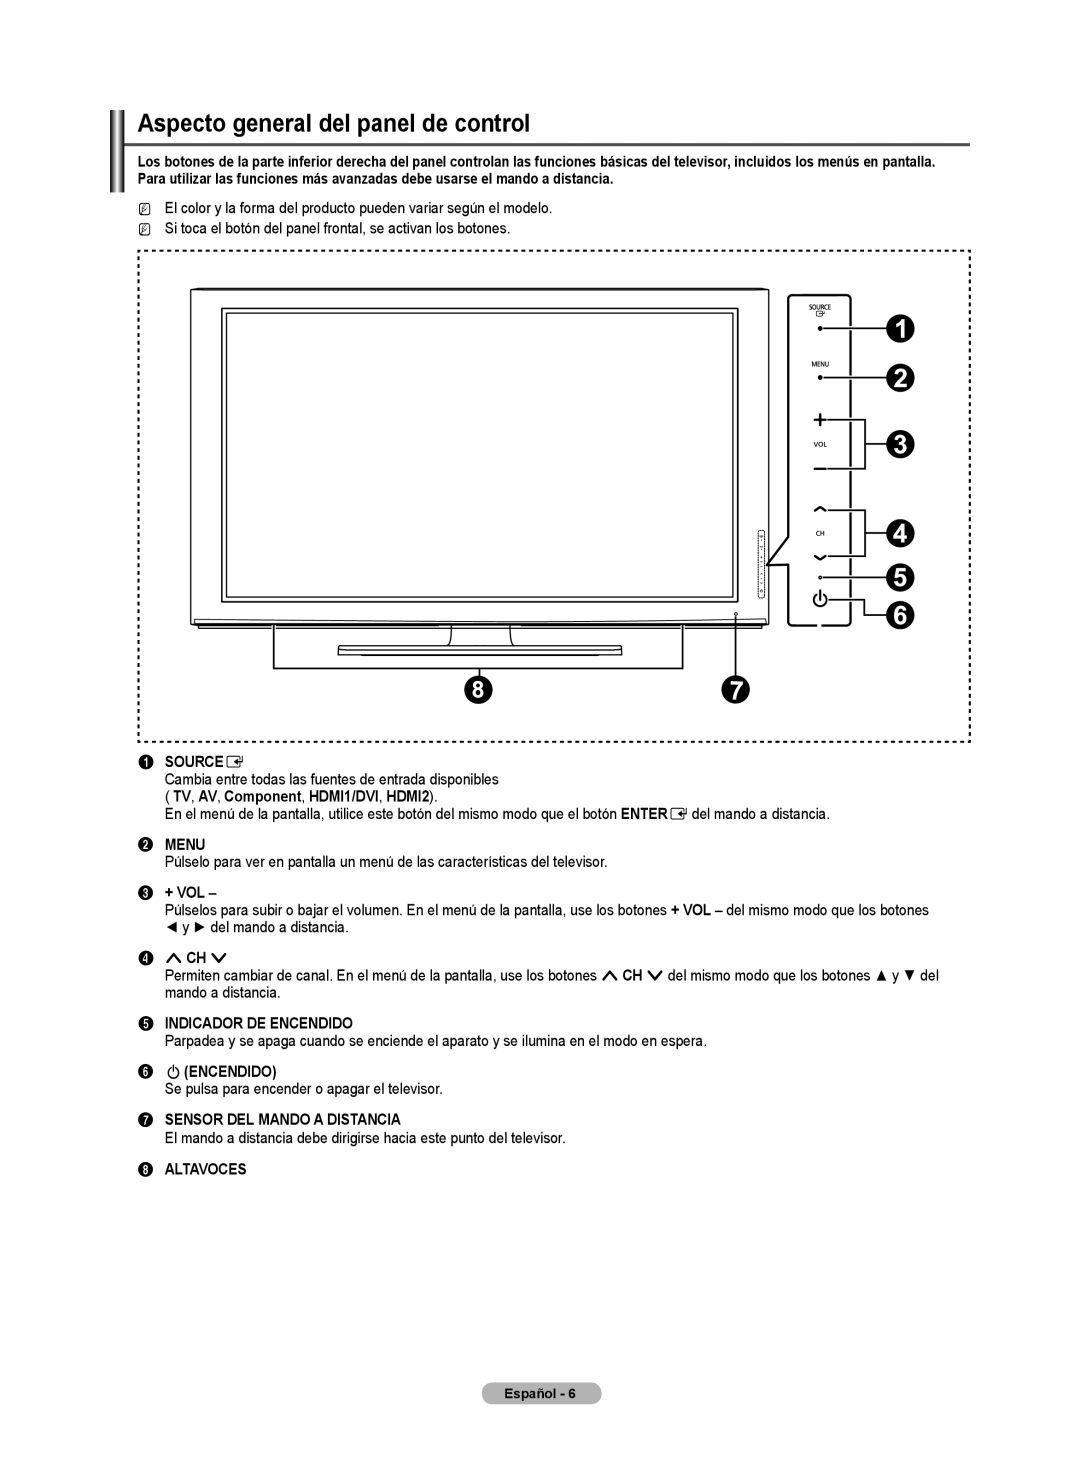 Samsung BN68-02426A-00 Sourcee, Menu, 3 + VOL, 4 CH, Indicador De Encendido, P Encendido, Sensor Del Mando A Distancia 